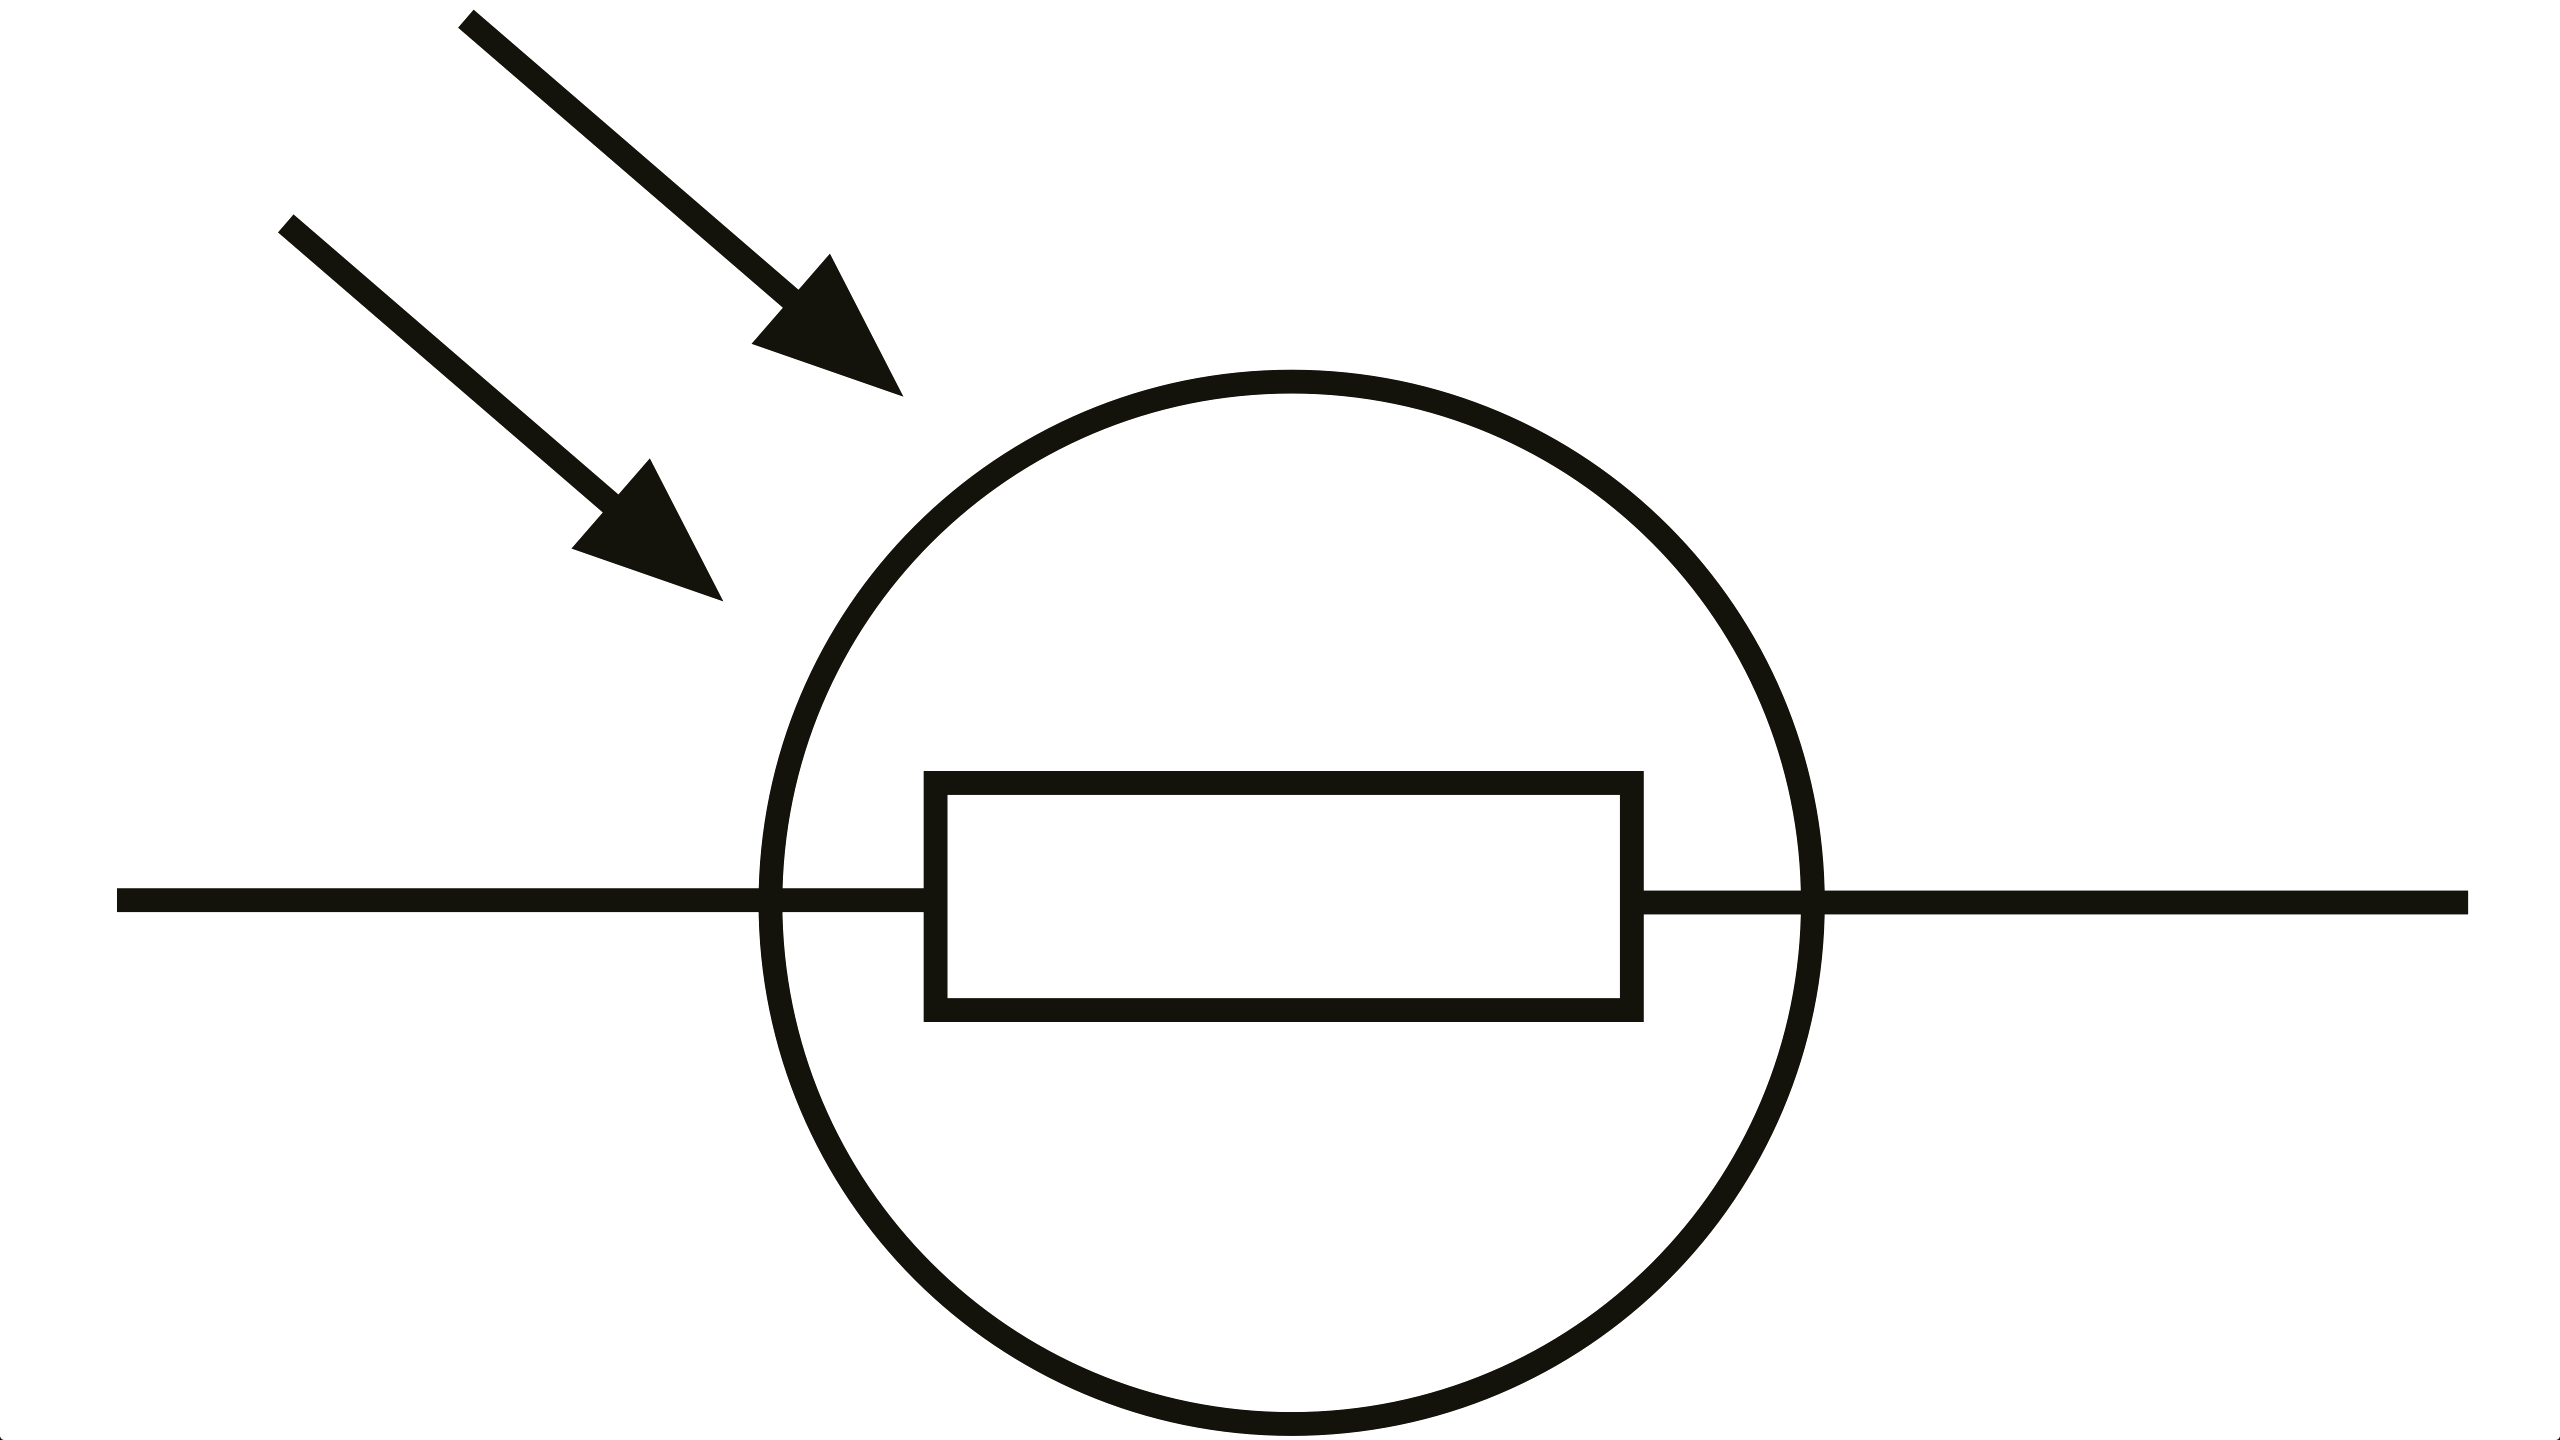 Component. resistor schematic symbols: Photo Symbol For Fixed ...